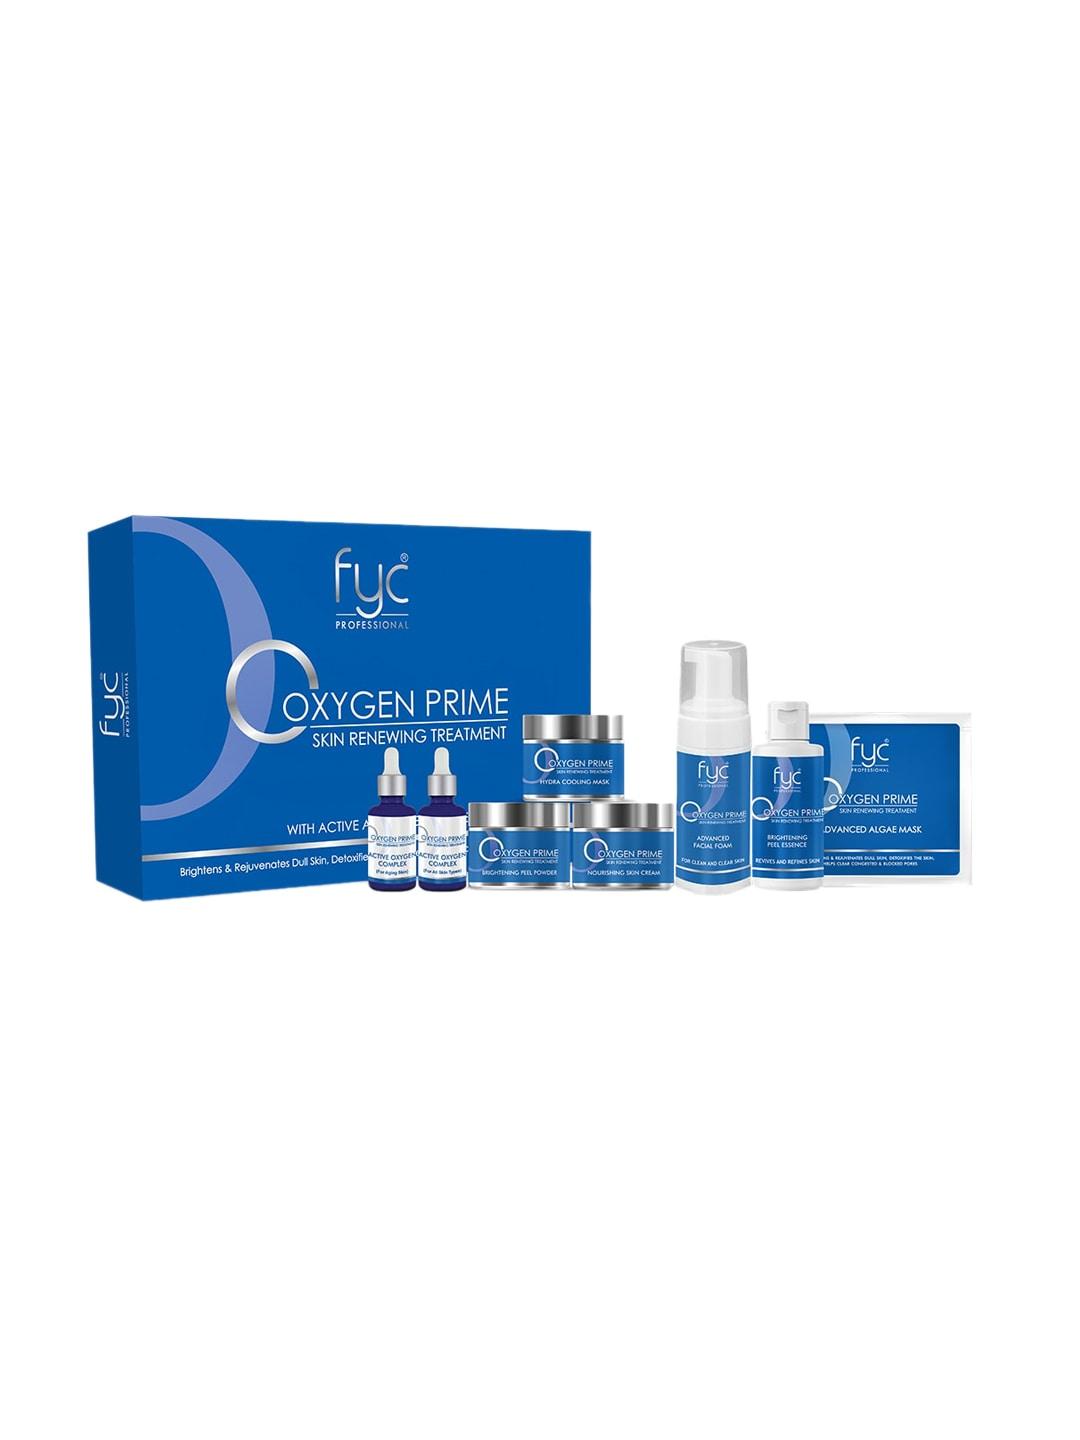 fyc professional oxygeb prime skin renewing treatment facial kit 580 g